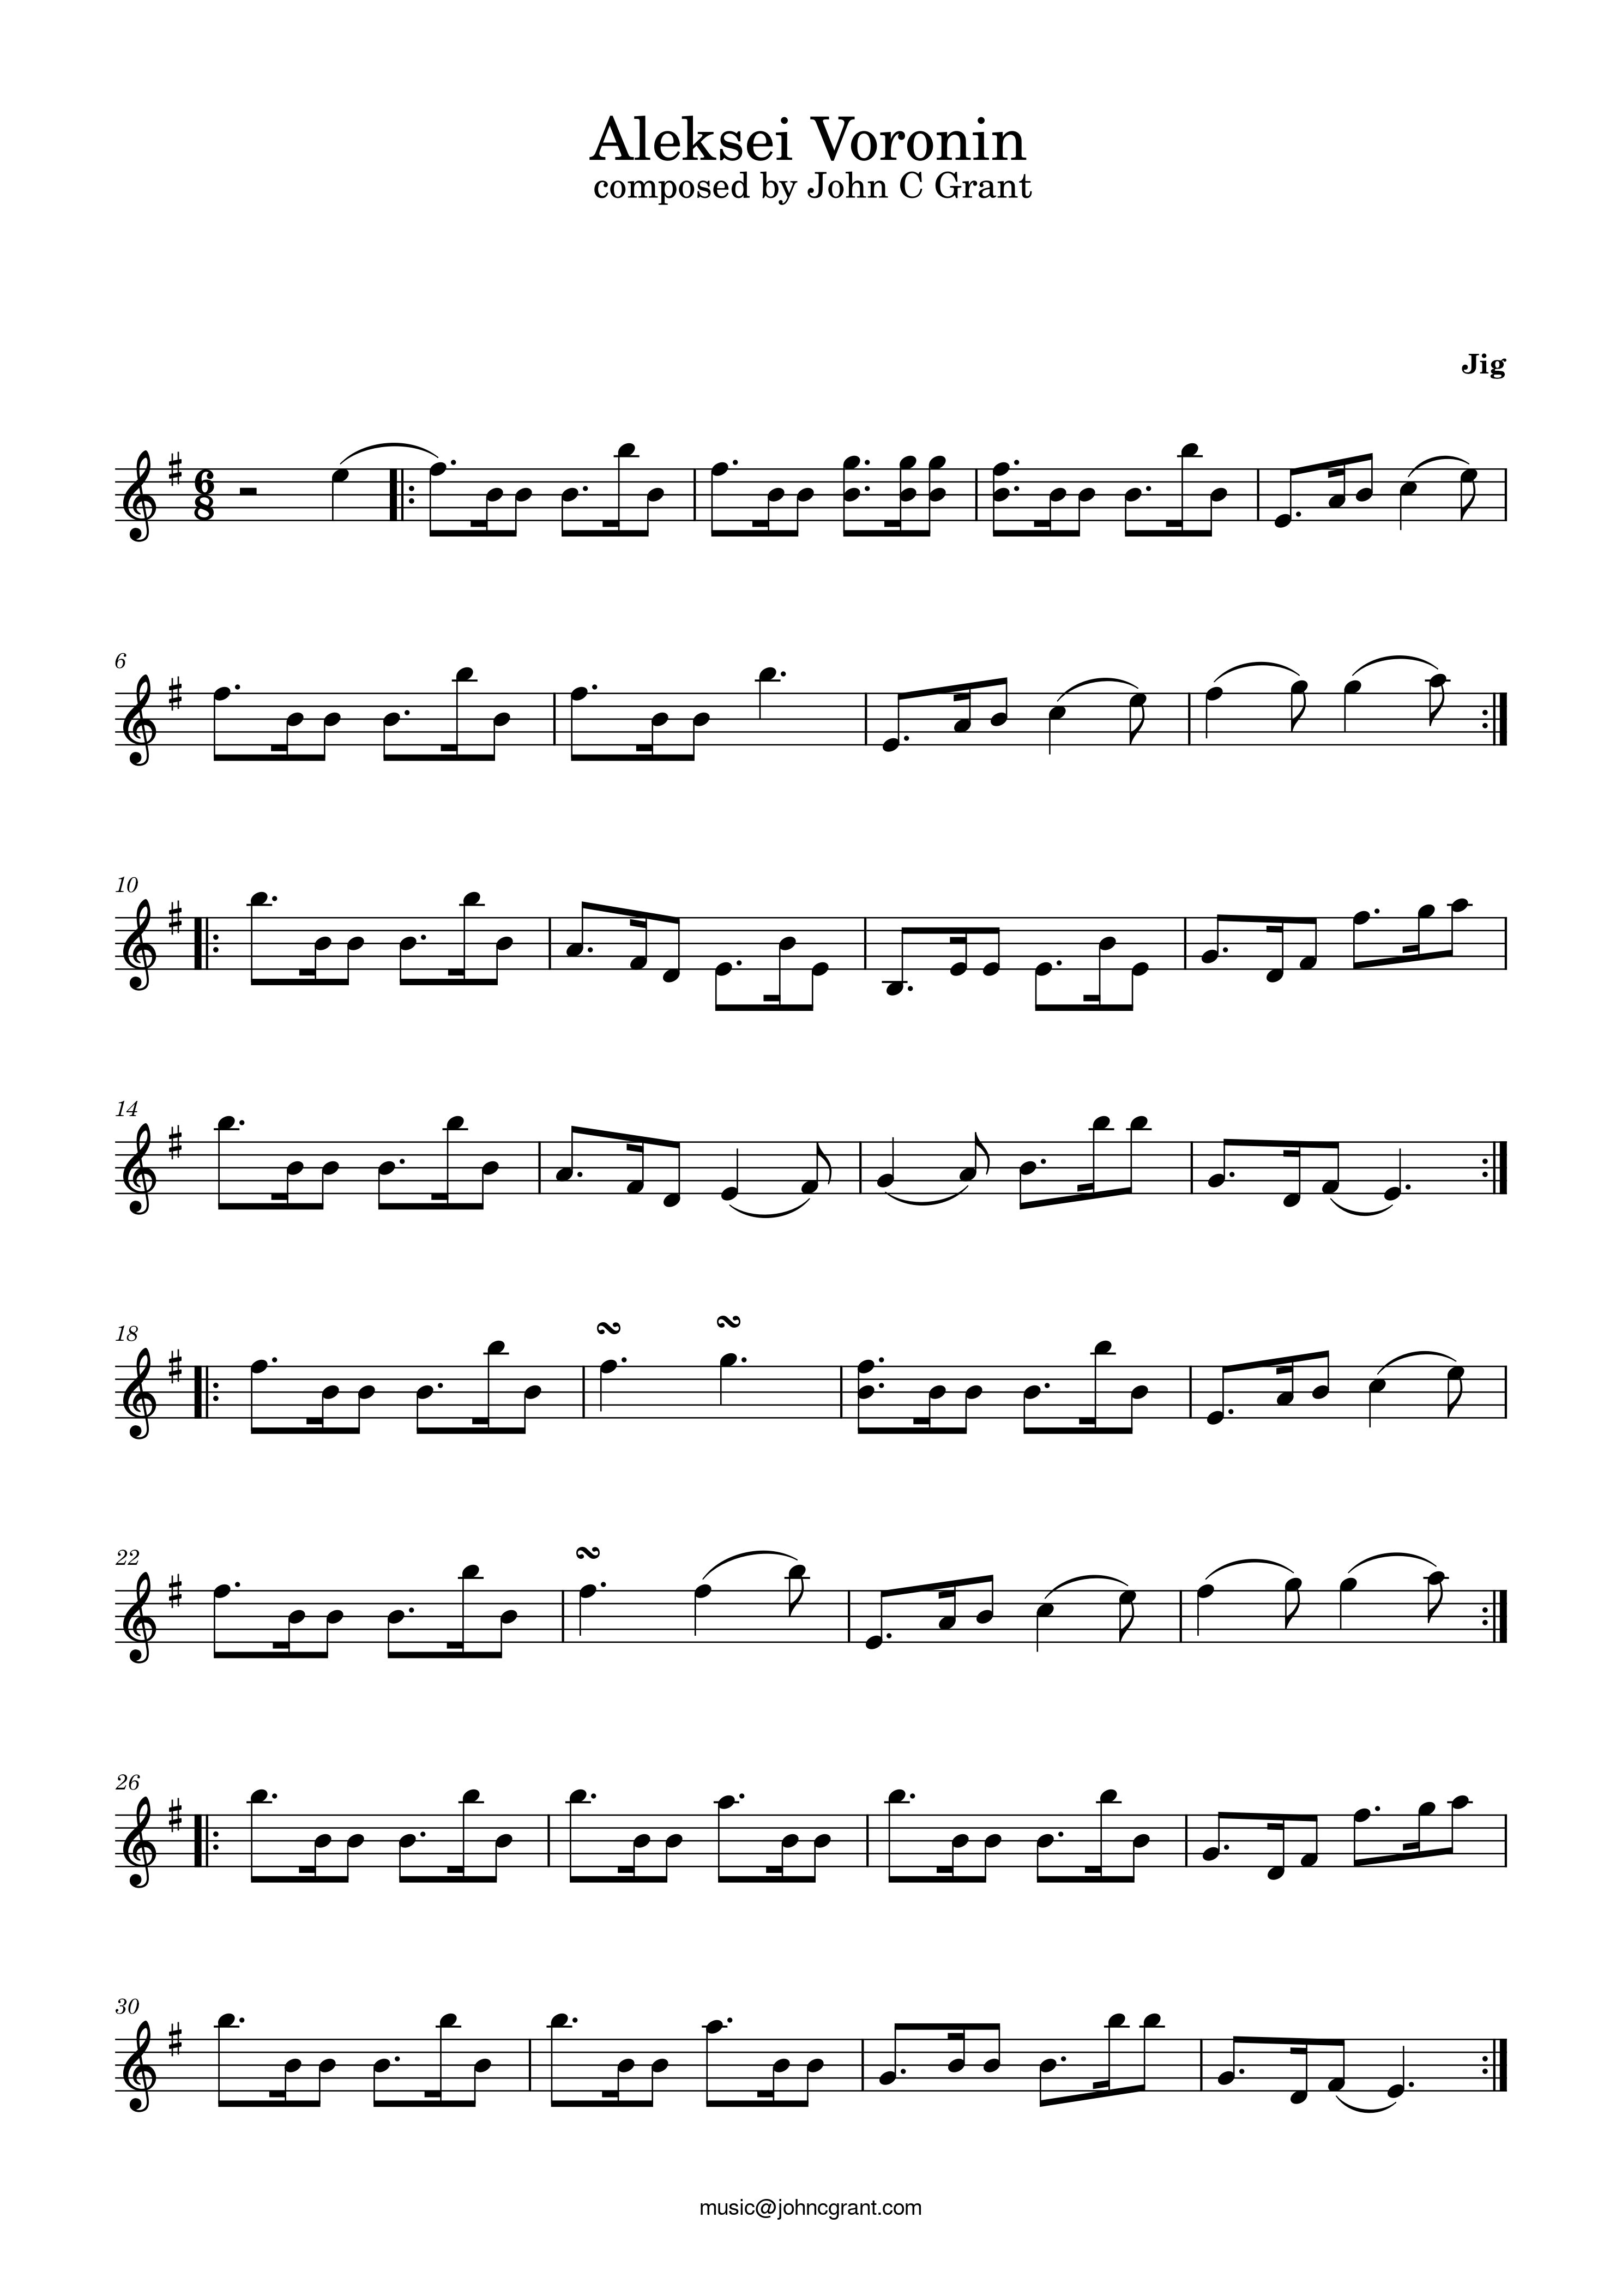 Aleksei Voronin - Composed by John C Grant (https://johncgrant.com). Traditional composer from Kilmarnock, Ayrshire, Scotland.